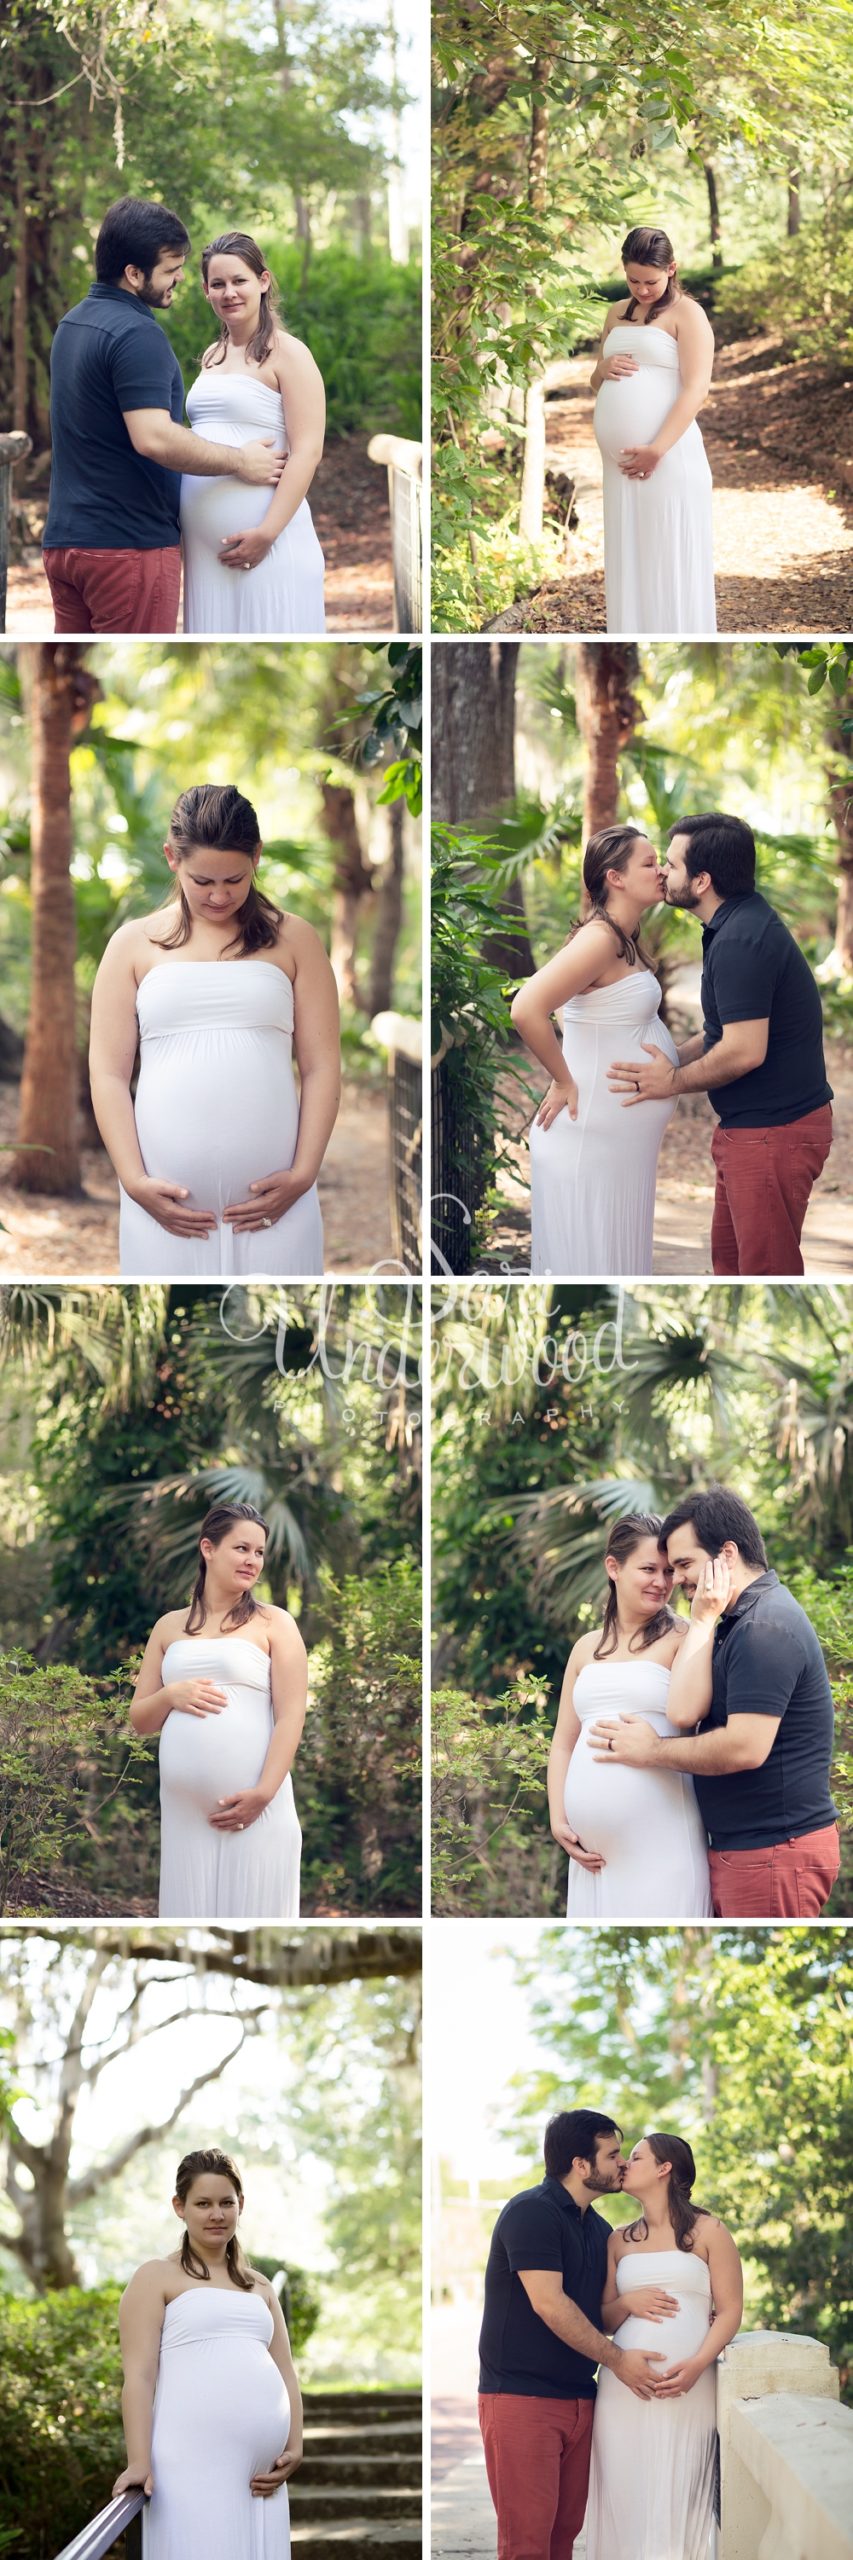 Expecting Felix | Central Florida maternity portraits